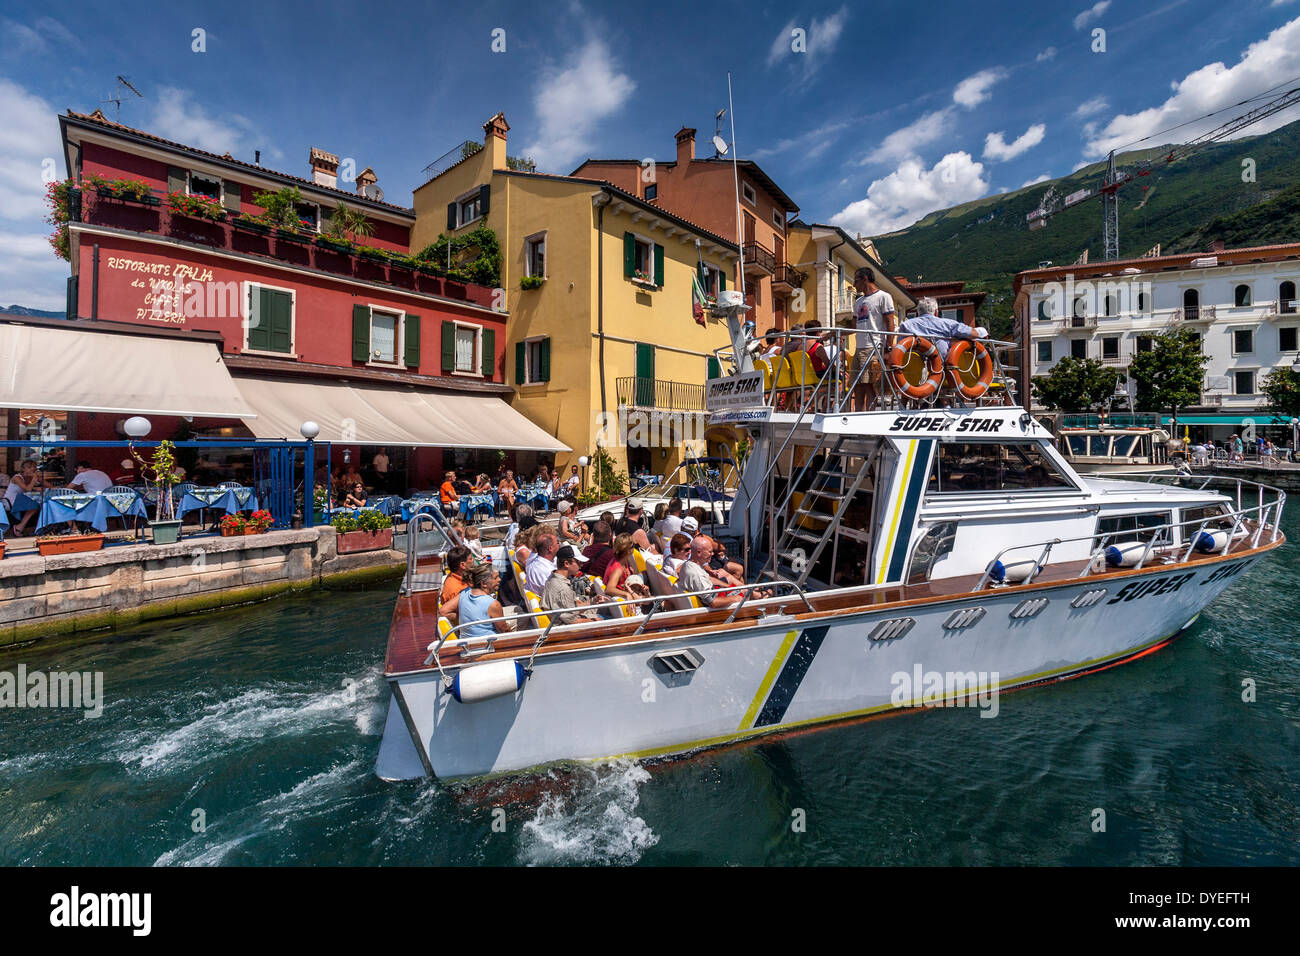 Tourists Taking A Boat Trip, Malcesine, Lake Garda, Italy Stock Photo